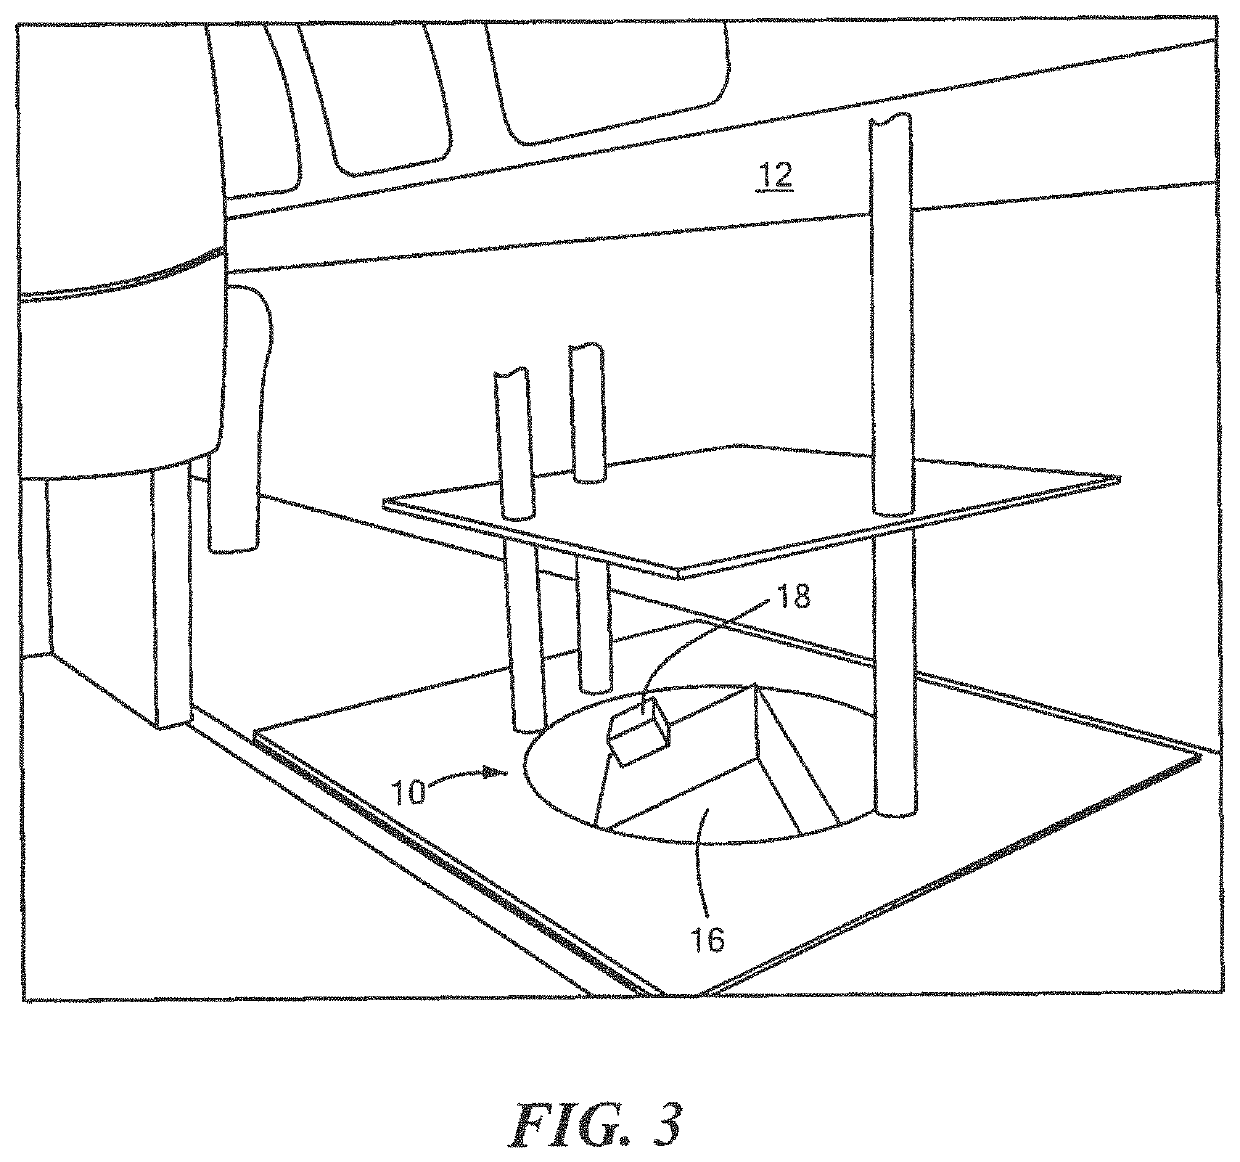 Airborne wind profiling portable radar system and method